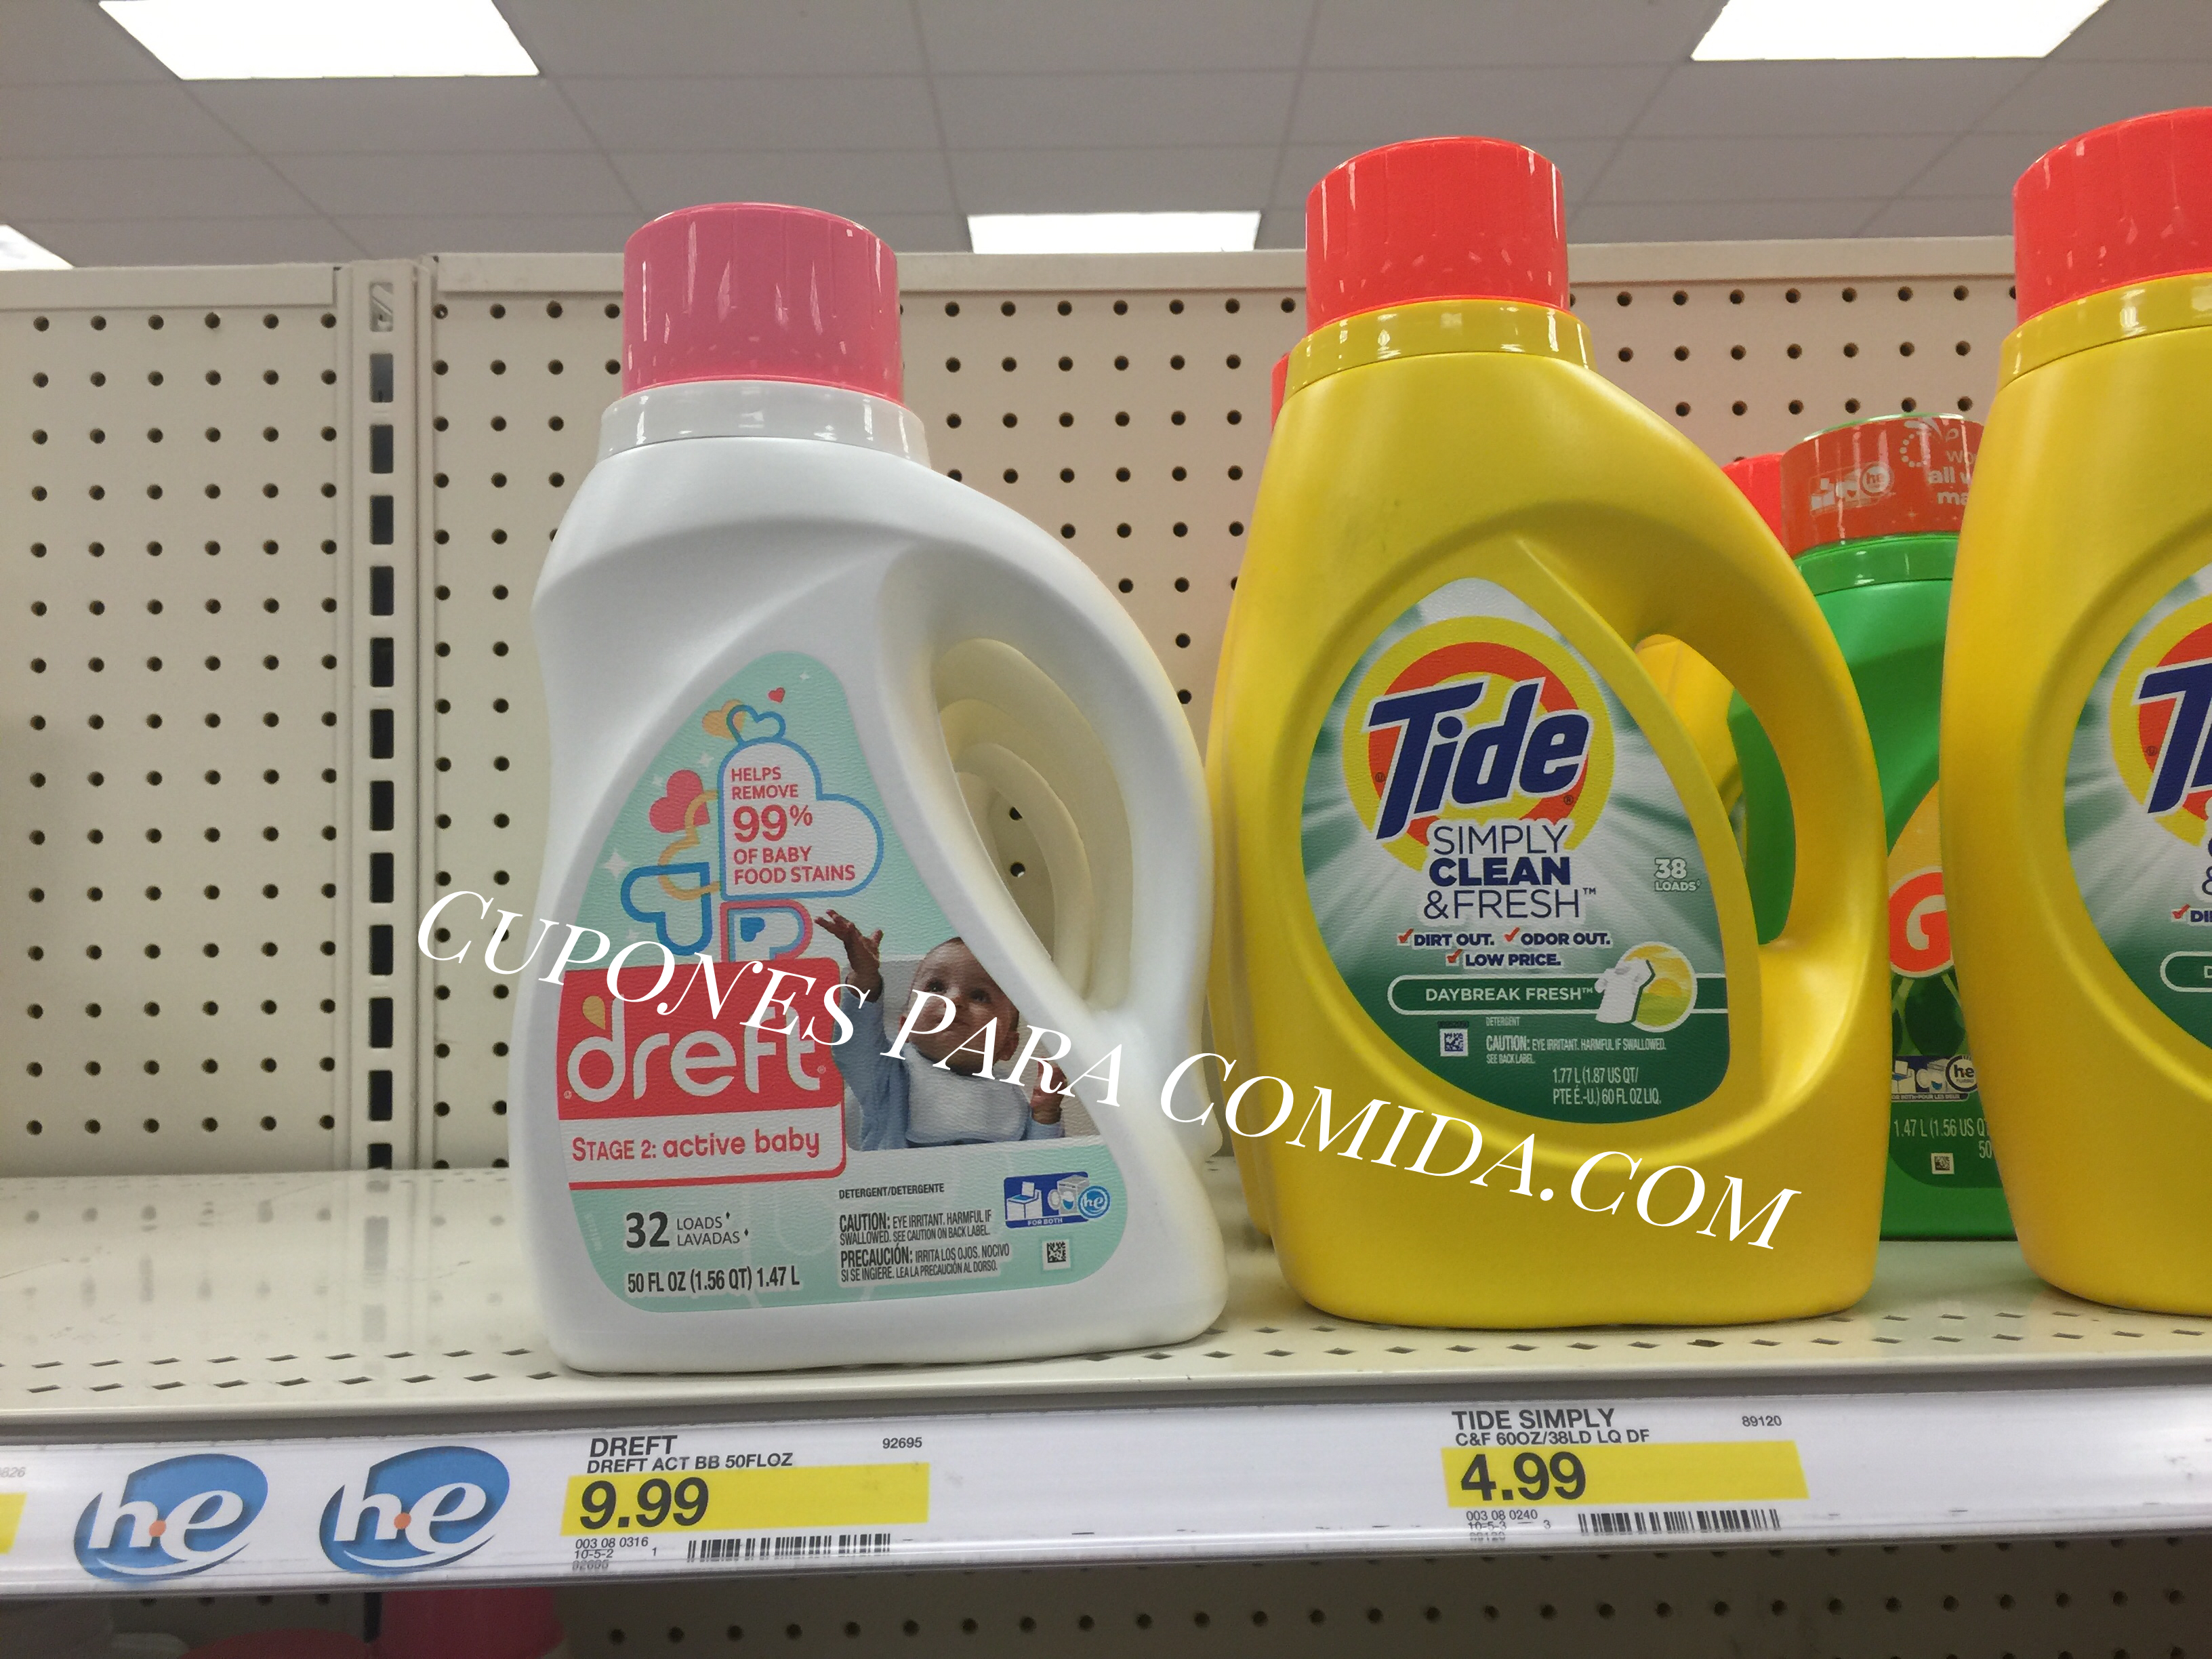 Dreft Laundry Detergent 32 Loads - Target 10/24/15